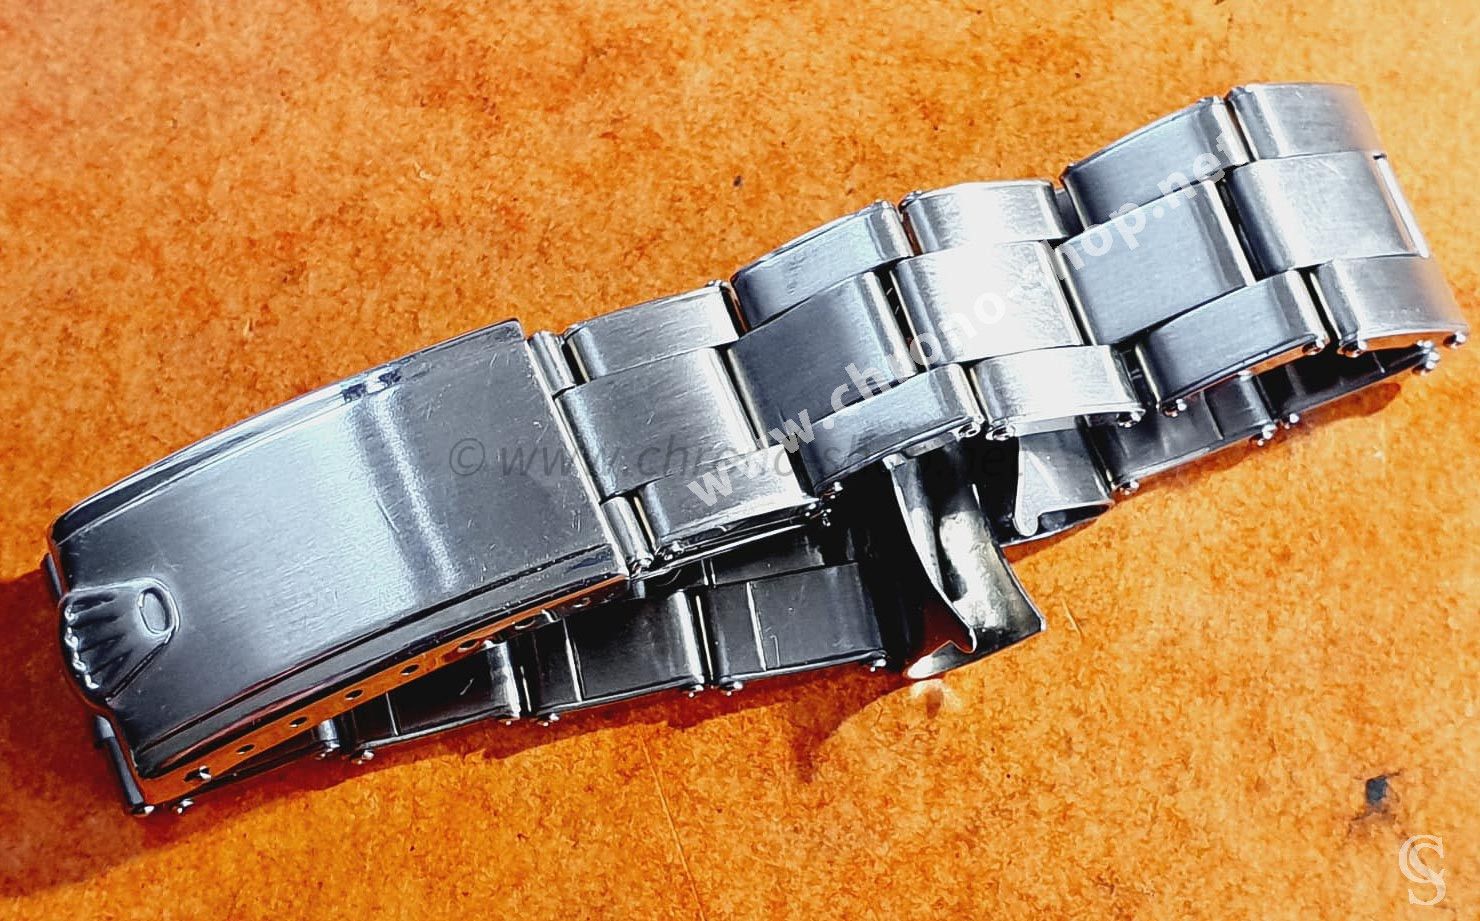 Rolex Bracelet Tightening: To Tighten or Not to Tighten | The Watch Buyers  Group